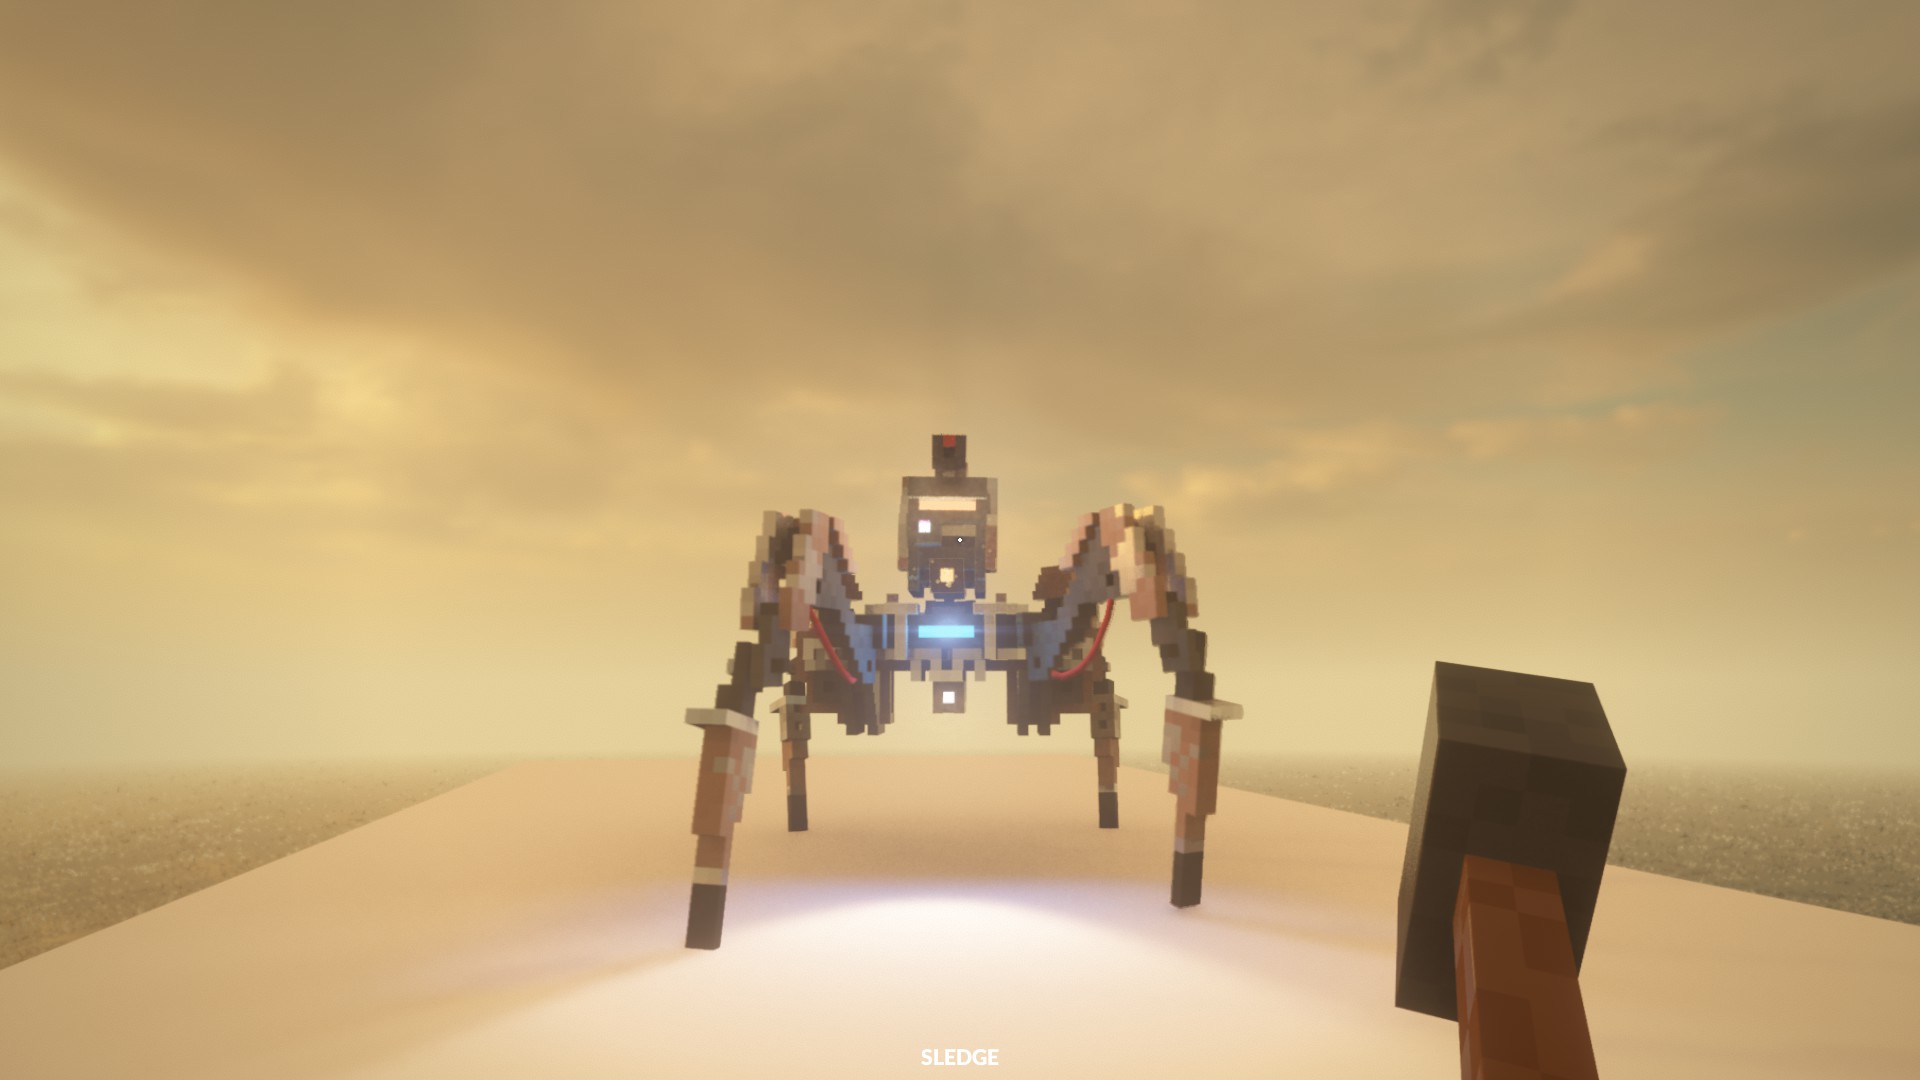 Teardown - Robots Information & Gameplay - The Spider Robot - 96362D2